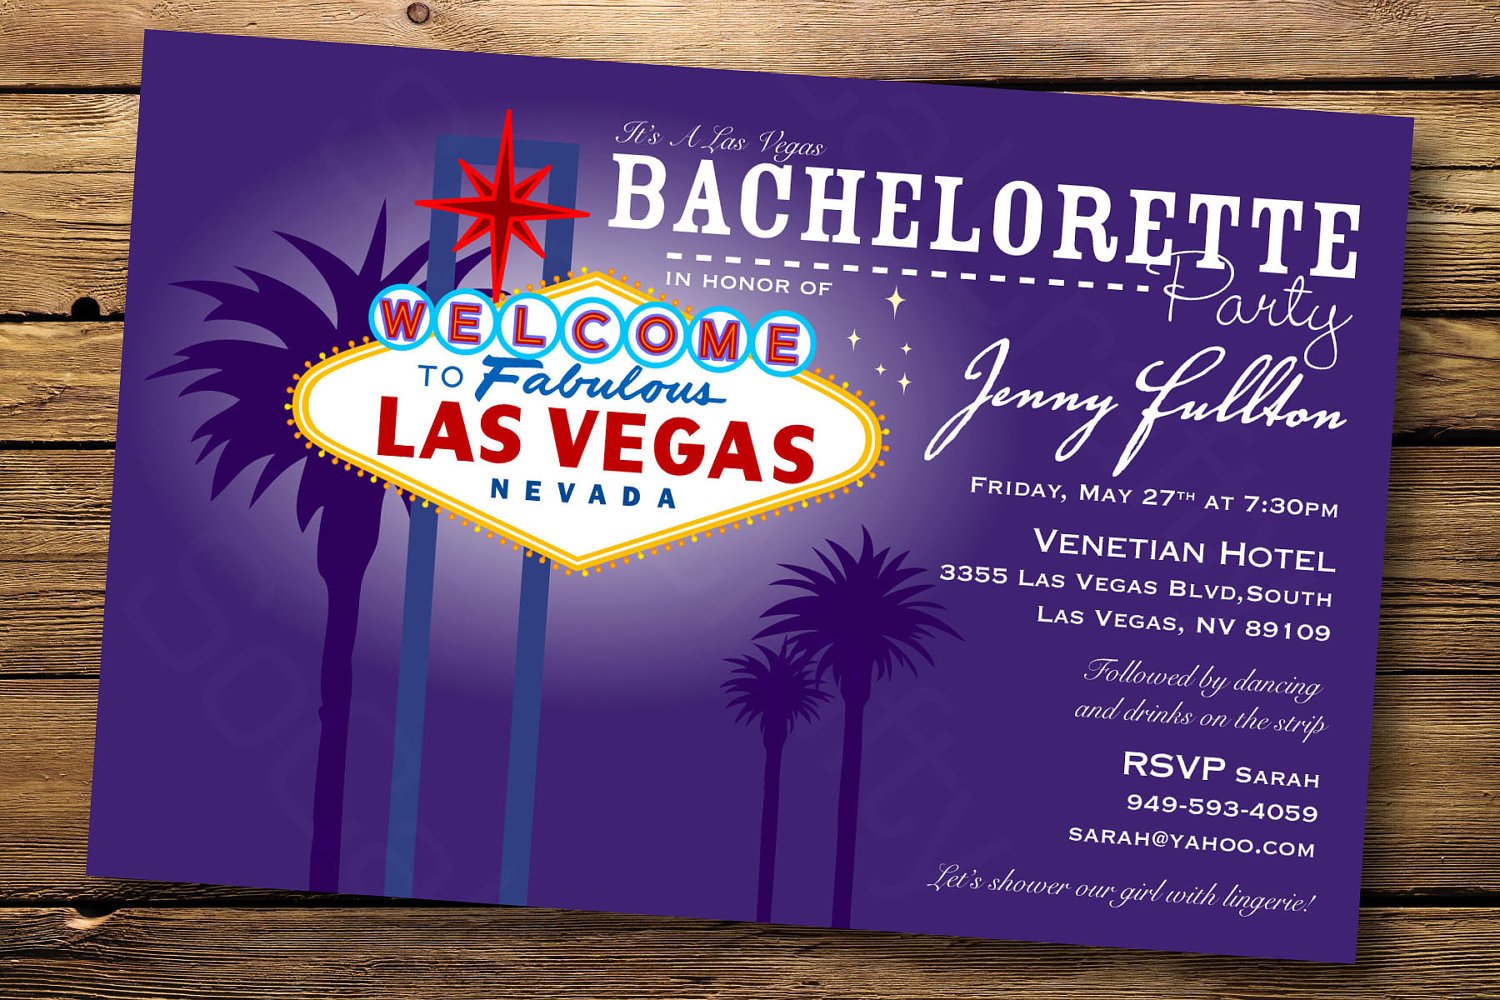 Las Vegas Bachelorette Lingerie Party Invitation By Socalcrafty Image